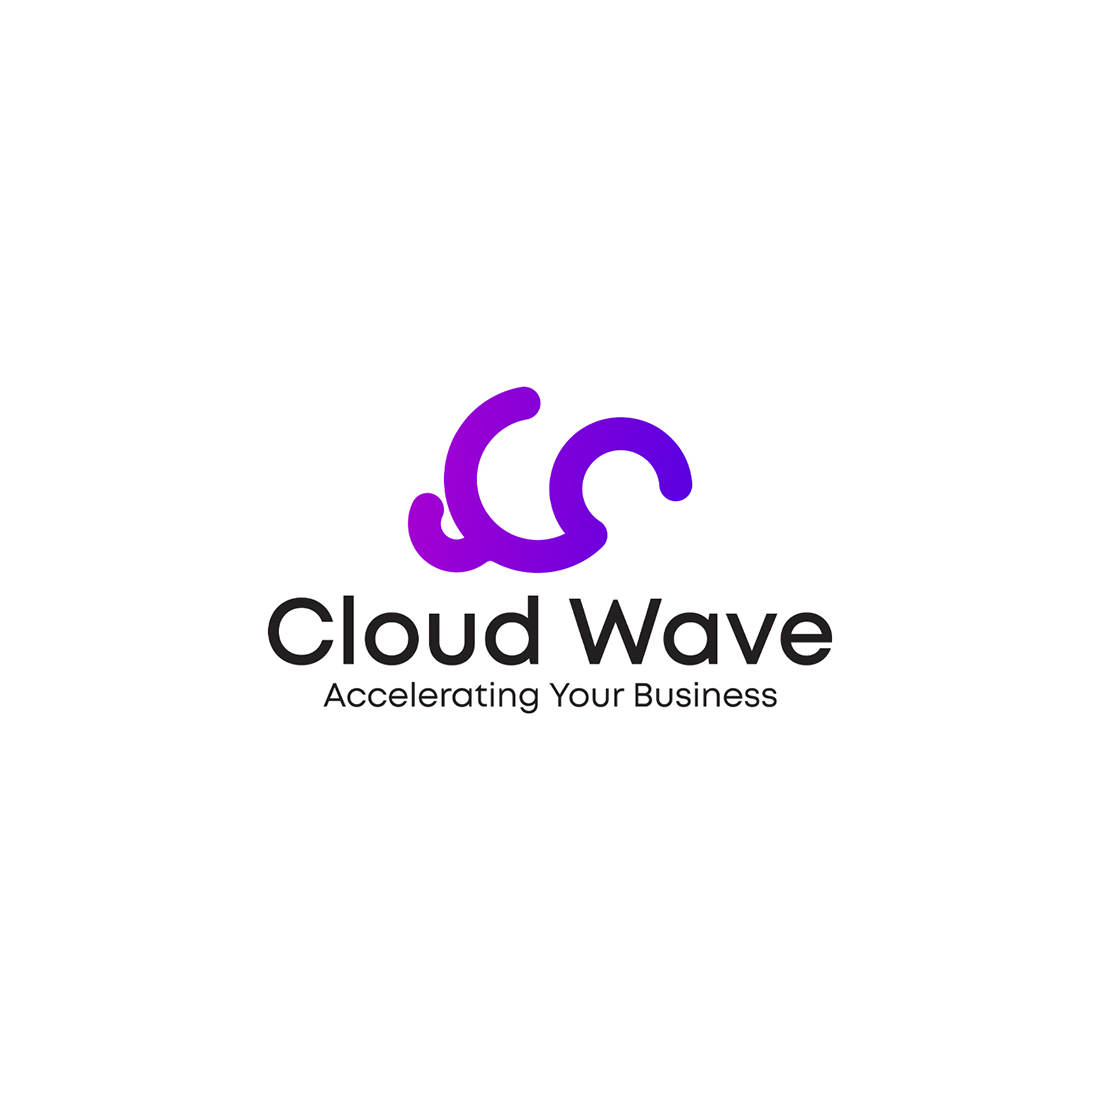 Cloud wave logo preview image.